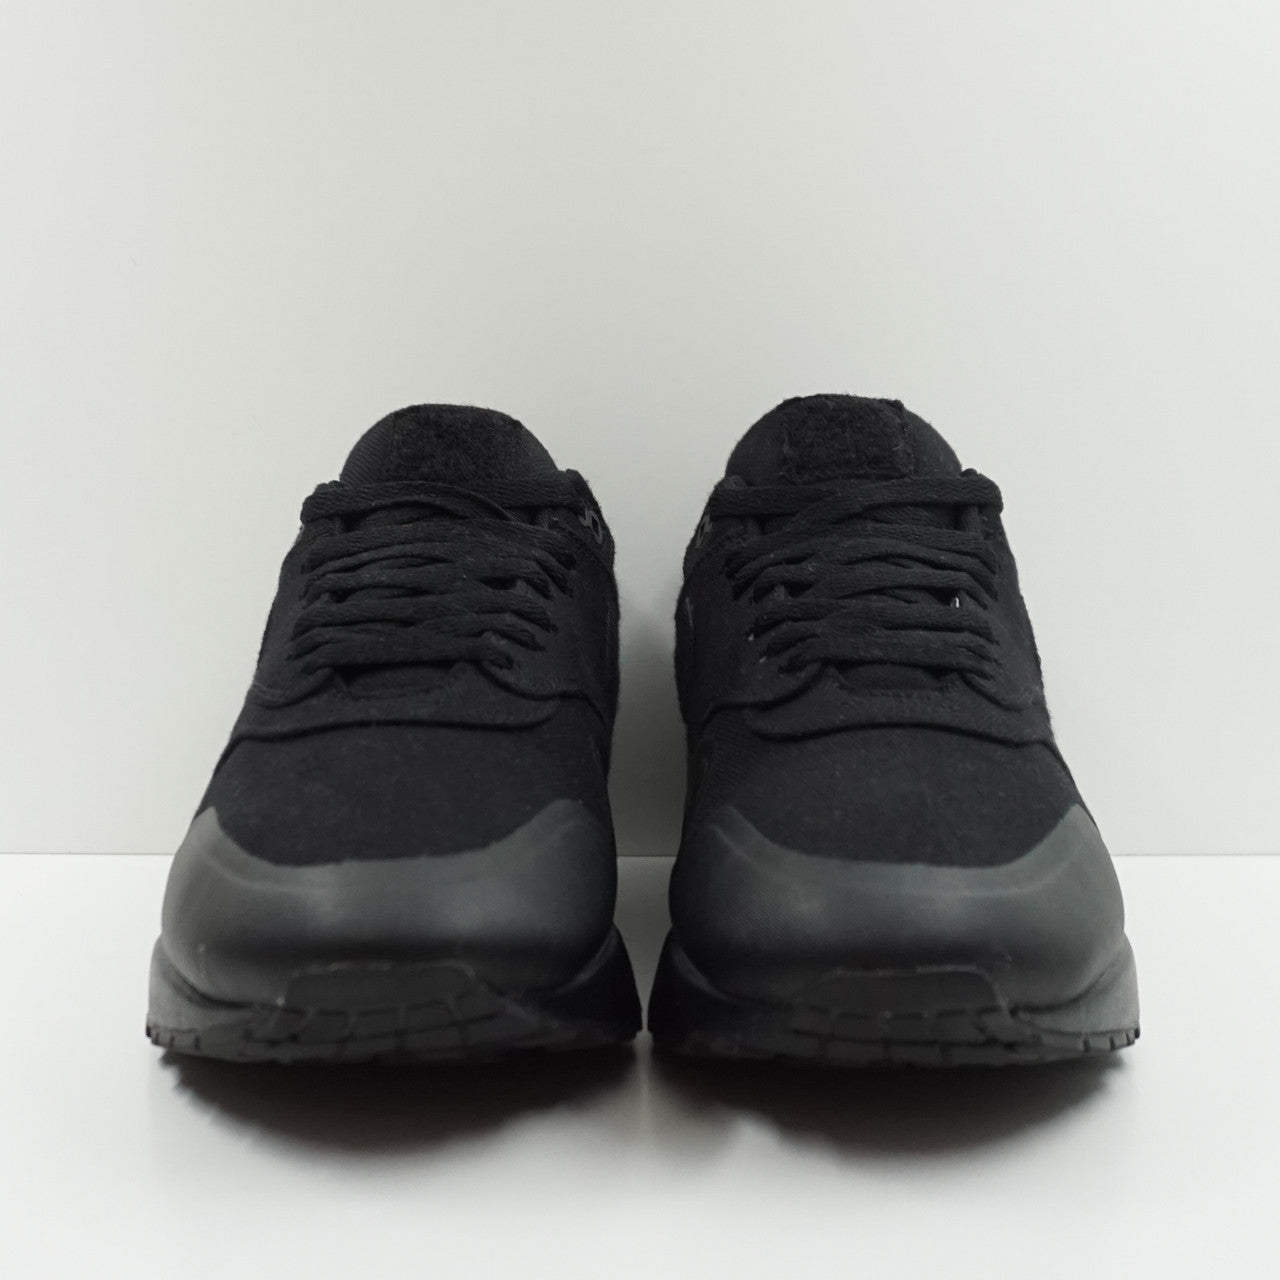 Nike Air Max 1 Patch Black